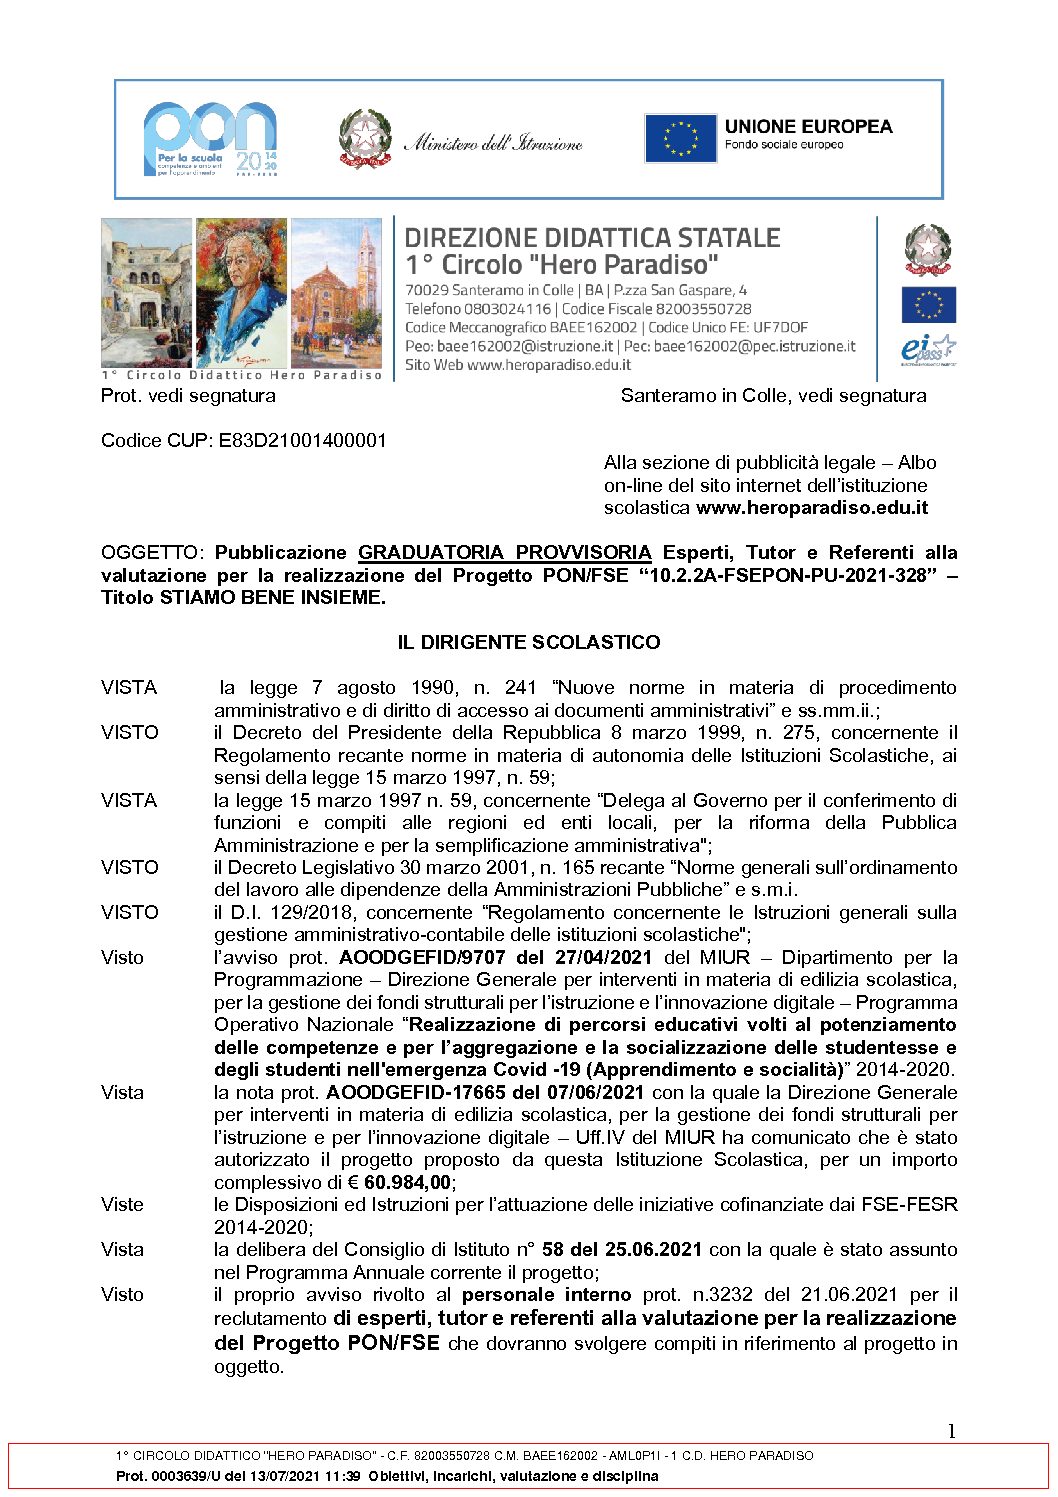 5._Graduatoria_provvisoria_Interni_PON_2021-328.pdf.pades